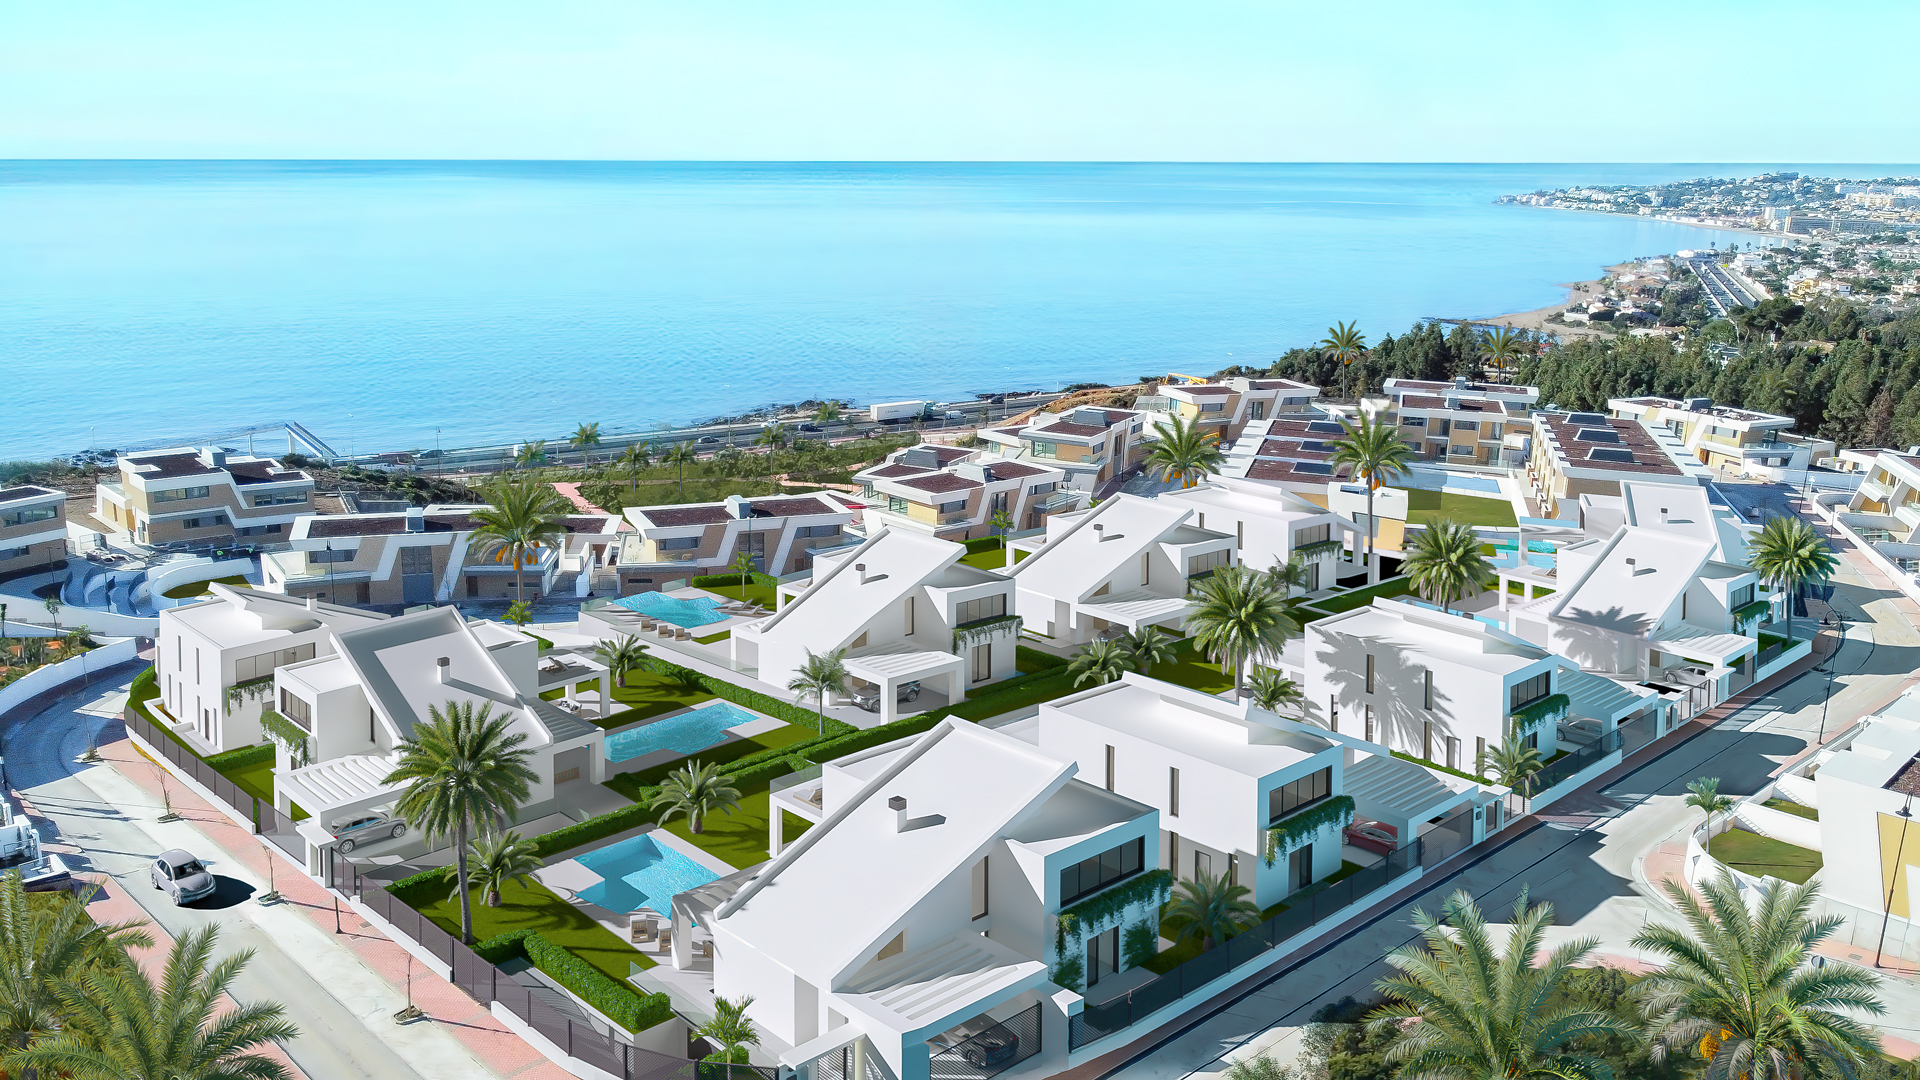 Premium villas near the beach at the El Chaparral golf course